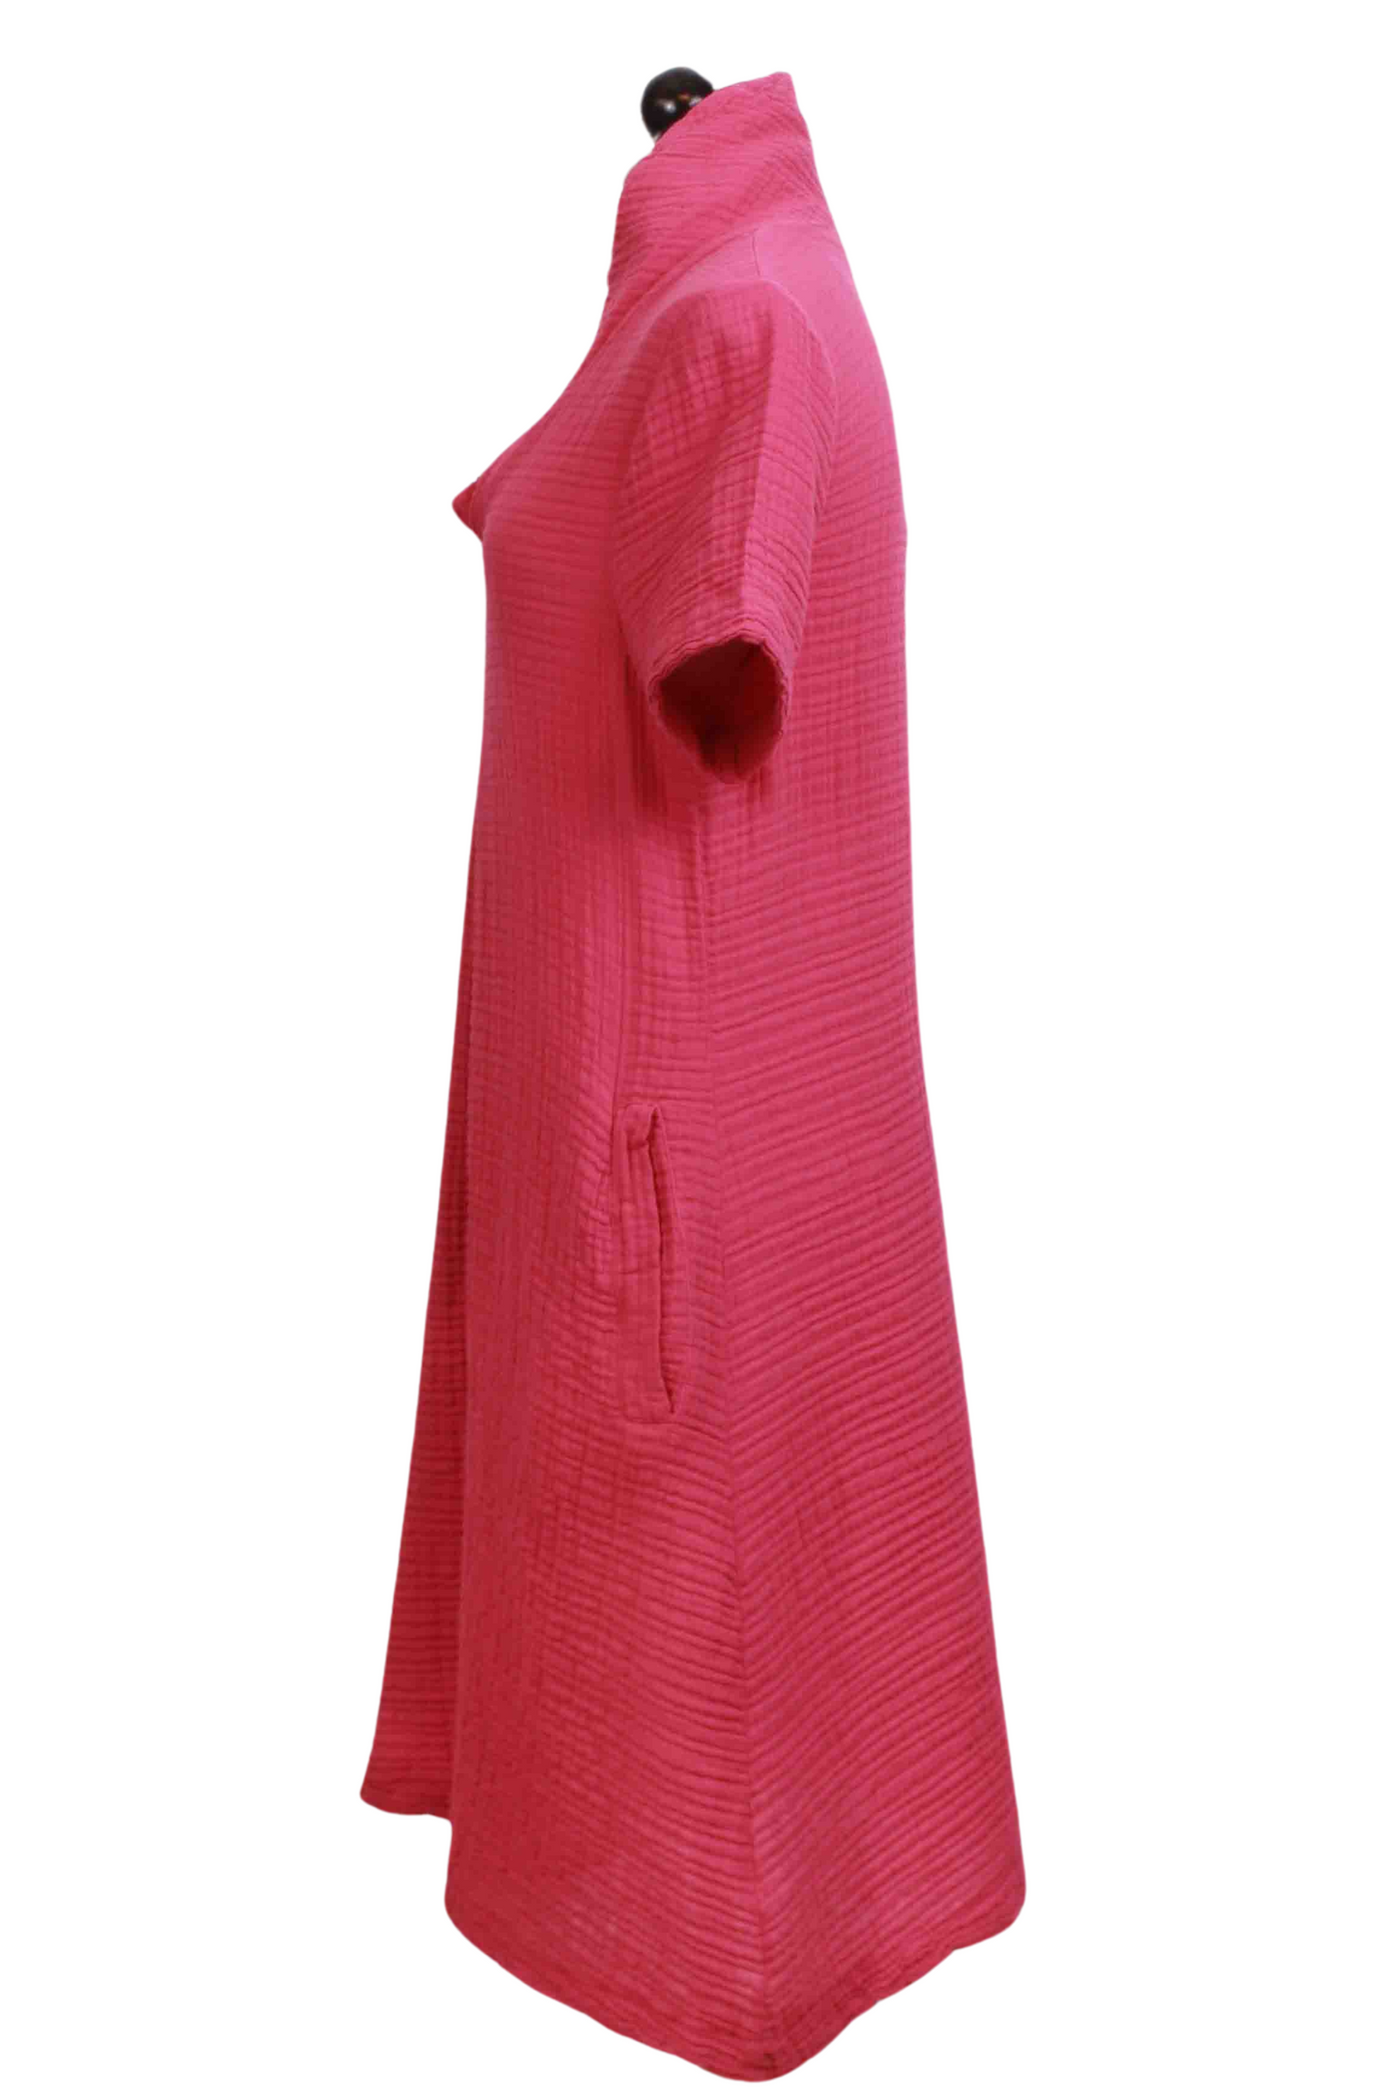 side view of Raspberry Short sleeve gauzy crinkle cotton Harley Dress by Kozan